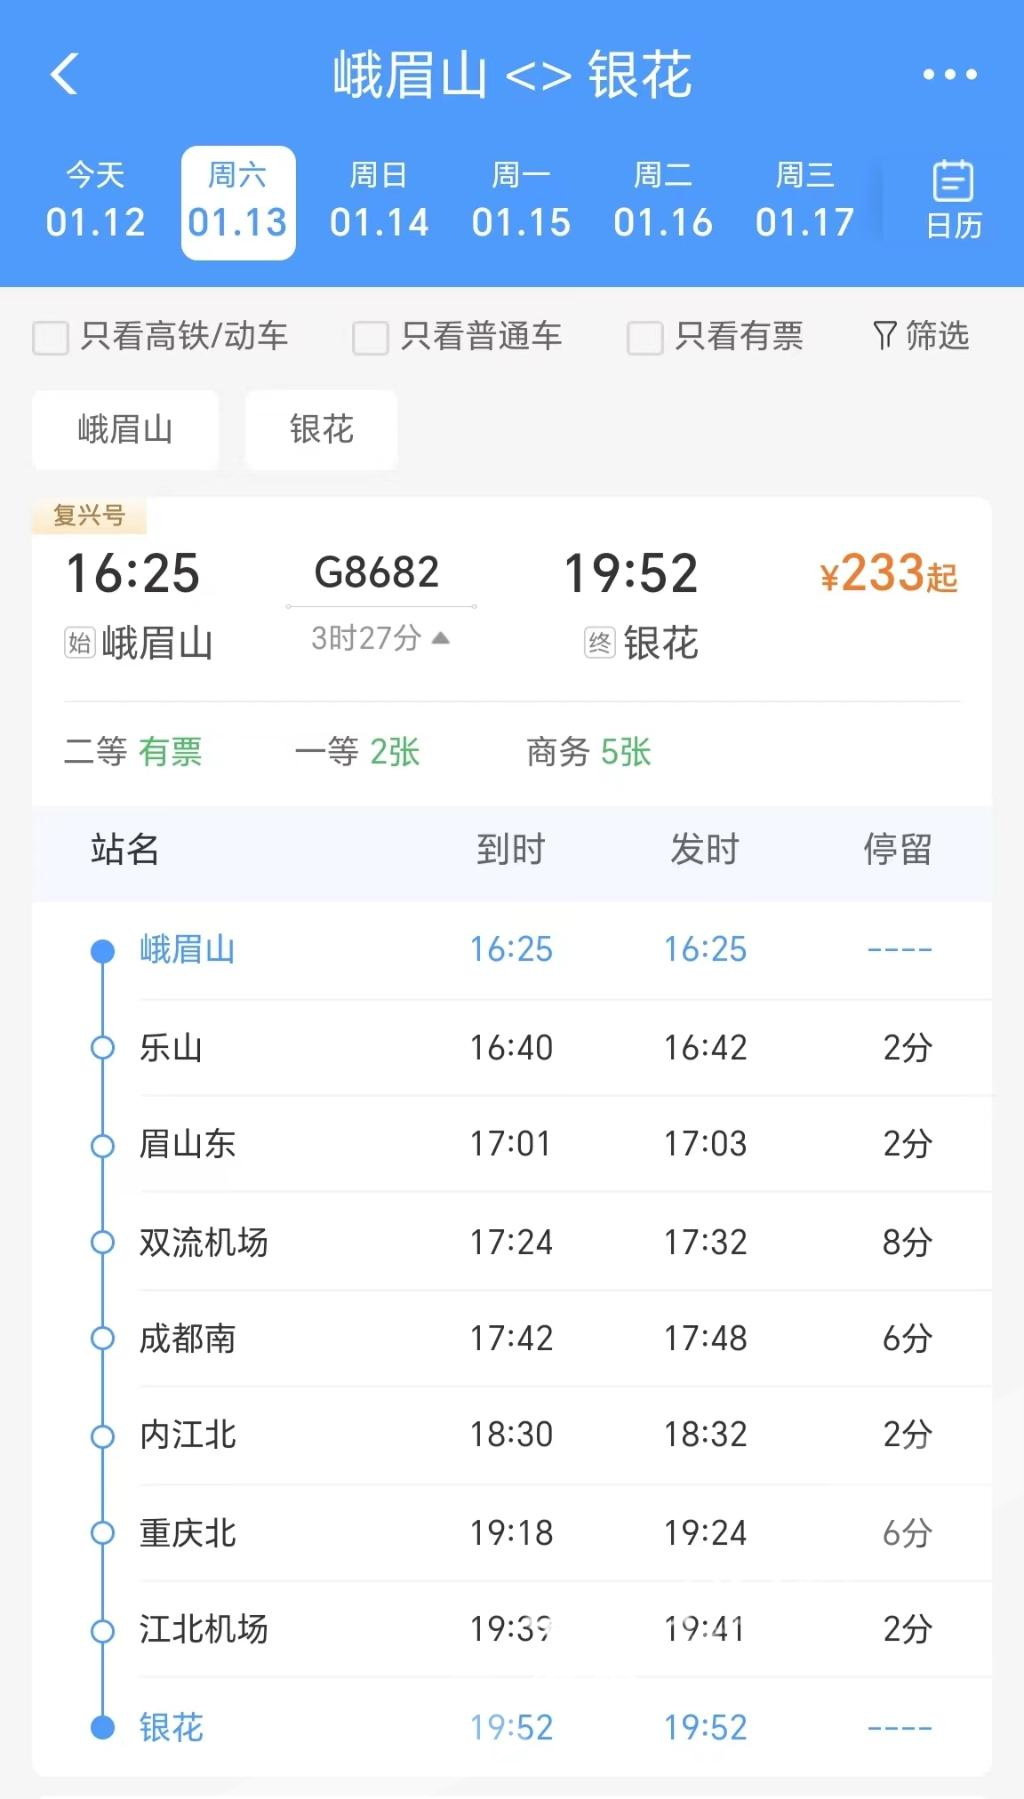 The train runs from Emeishan Railway Station to Yinhua Railway Station, passing through Shuangliu Airport Railway Station and Jiangbei Airport Railway Station.